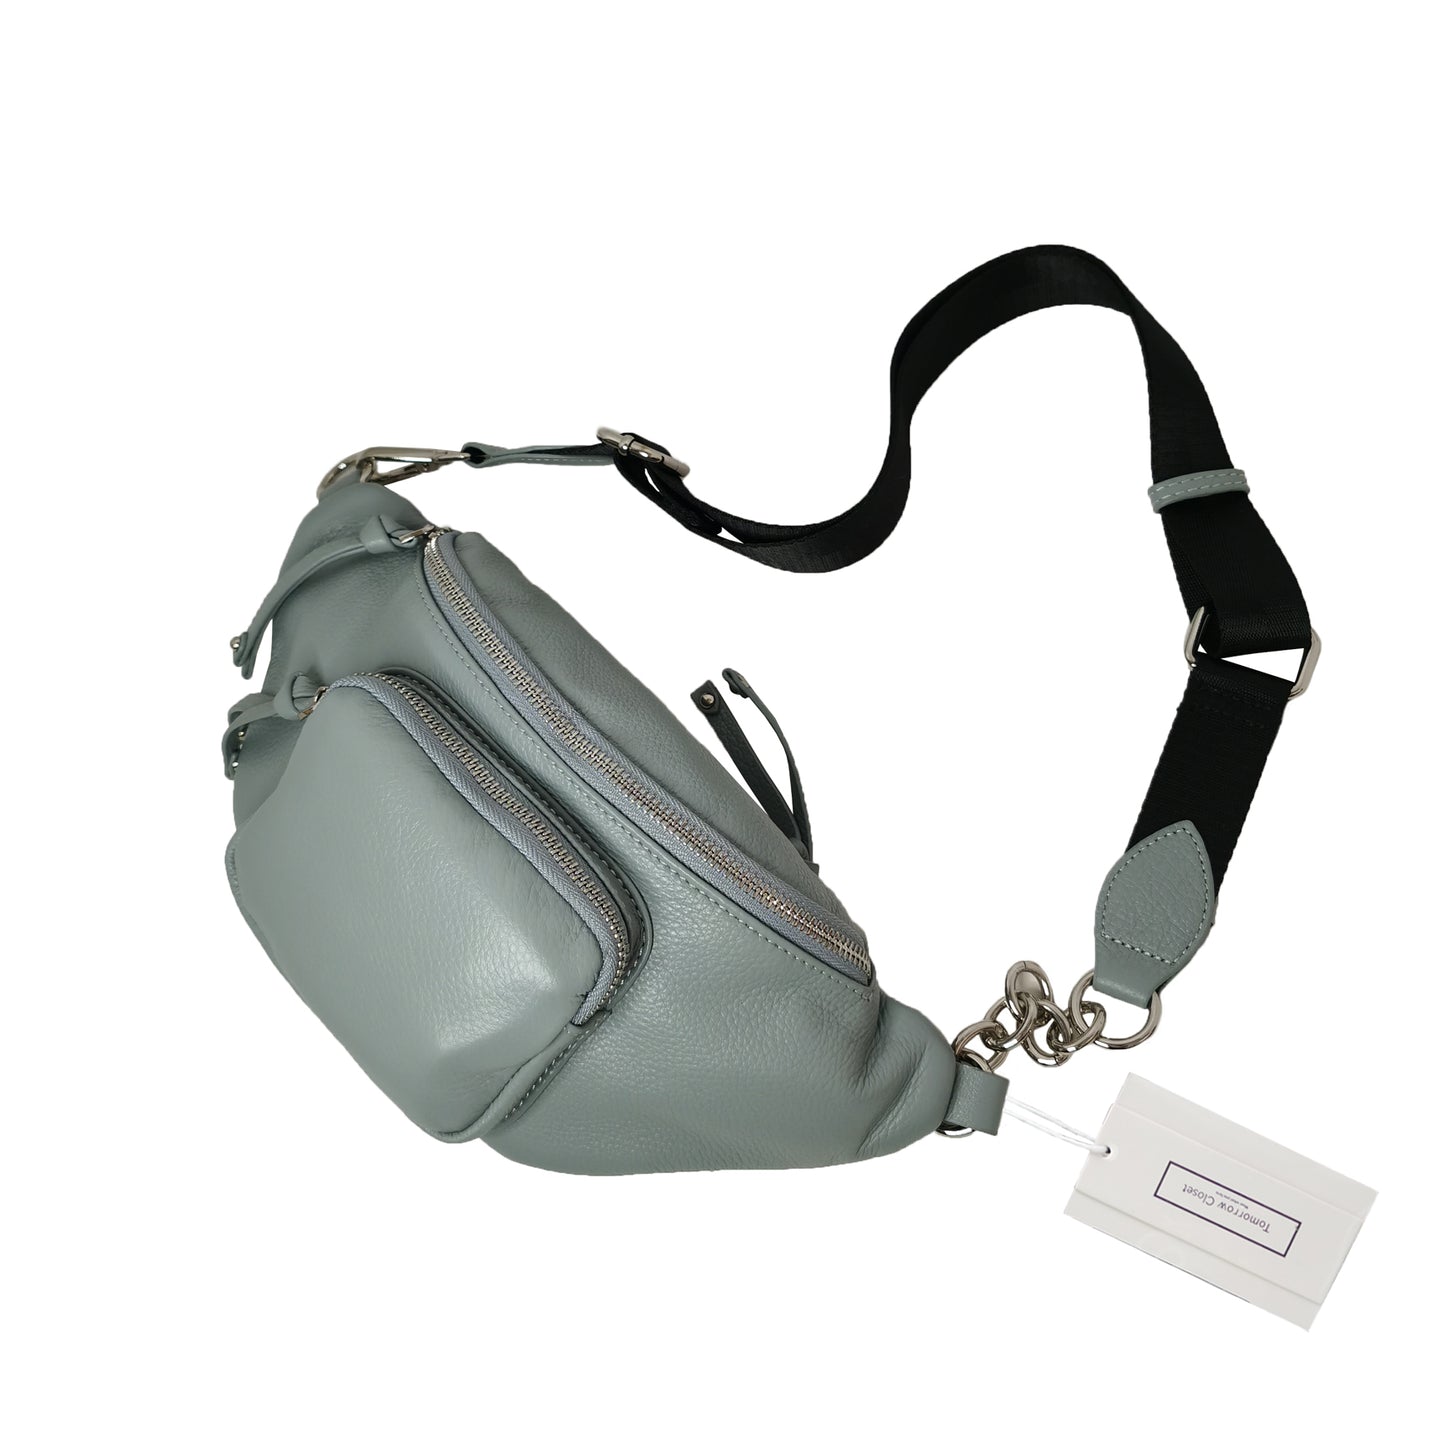 Women's cowhide leather handbag Vesny pouch design